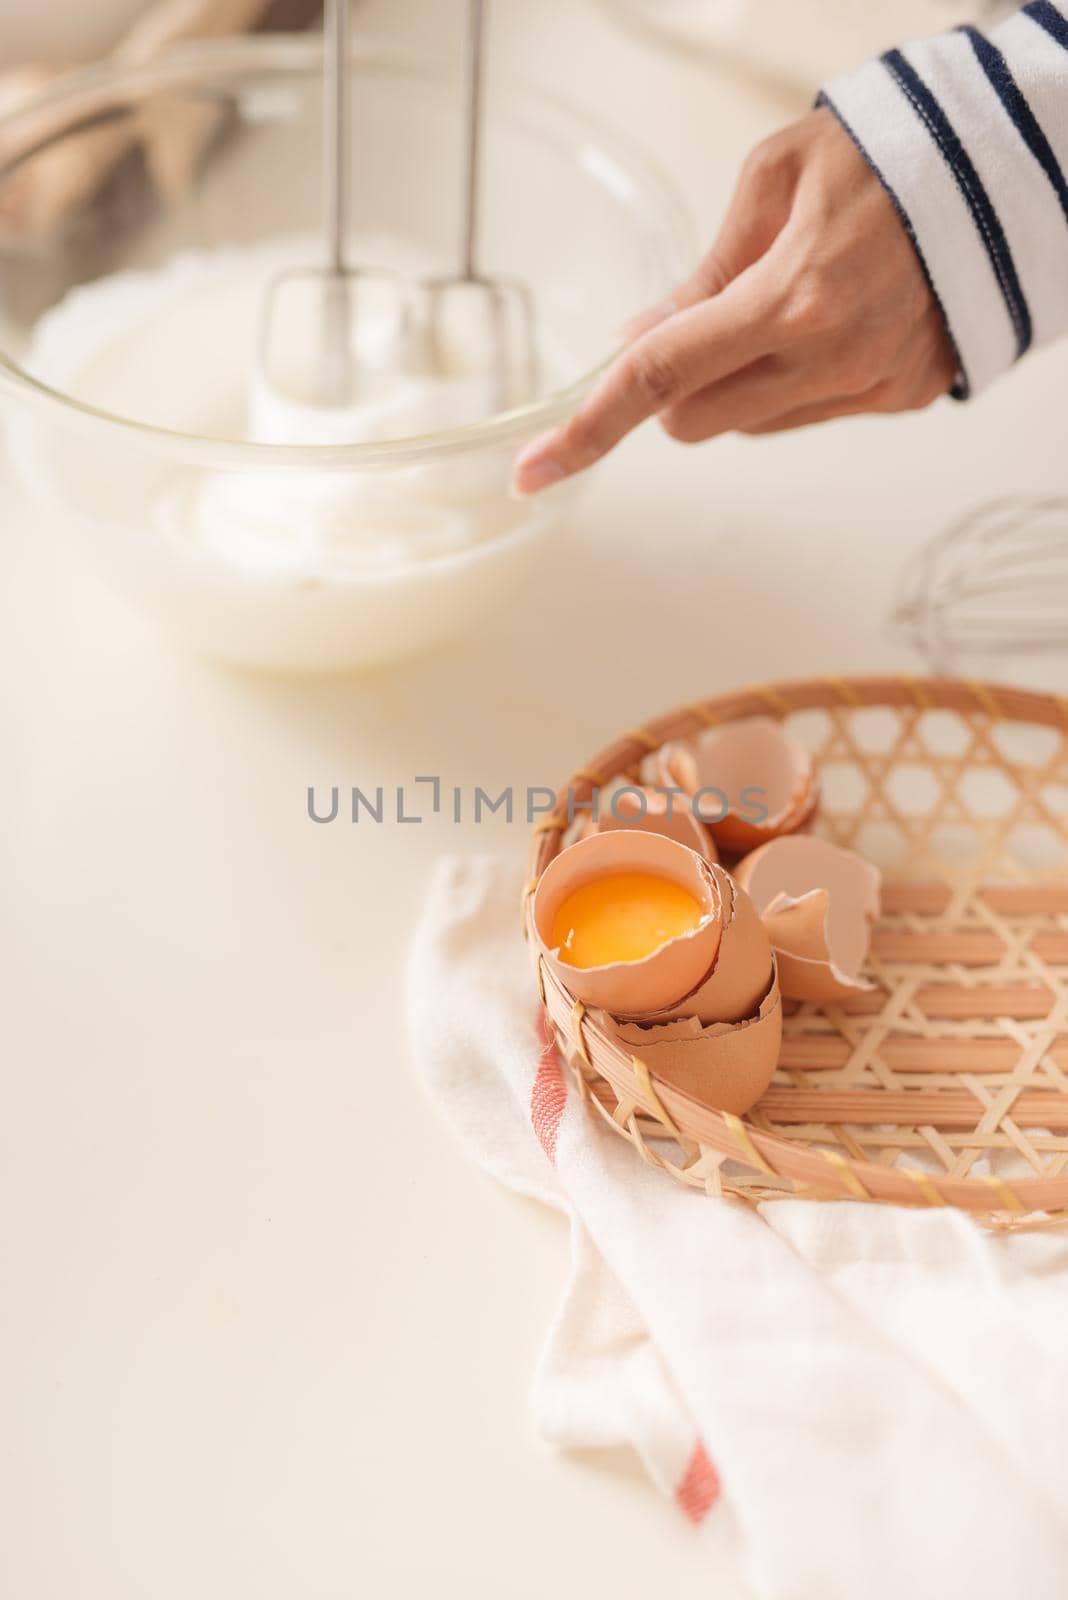 Mixing white egg cream in bowl with motor mixer, baking cake 